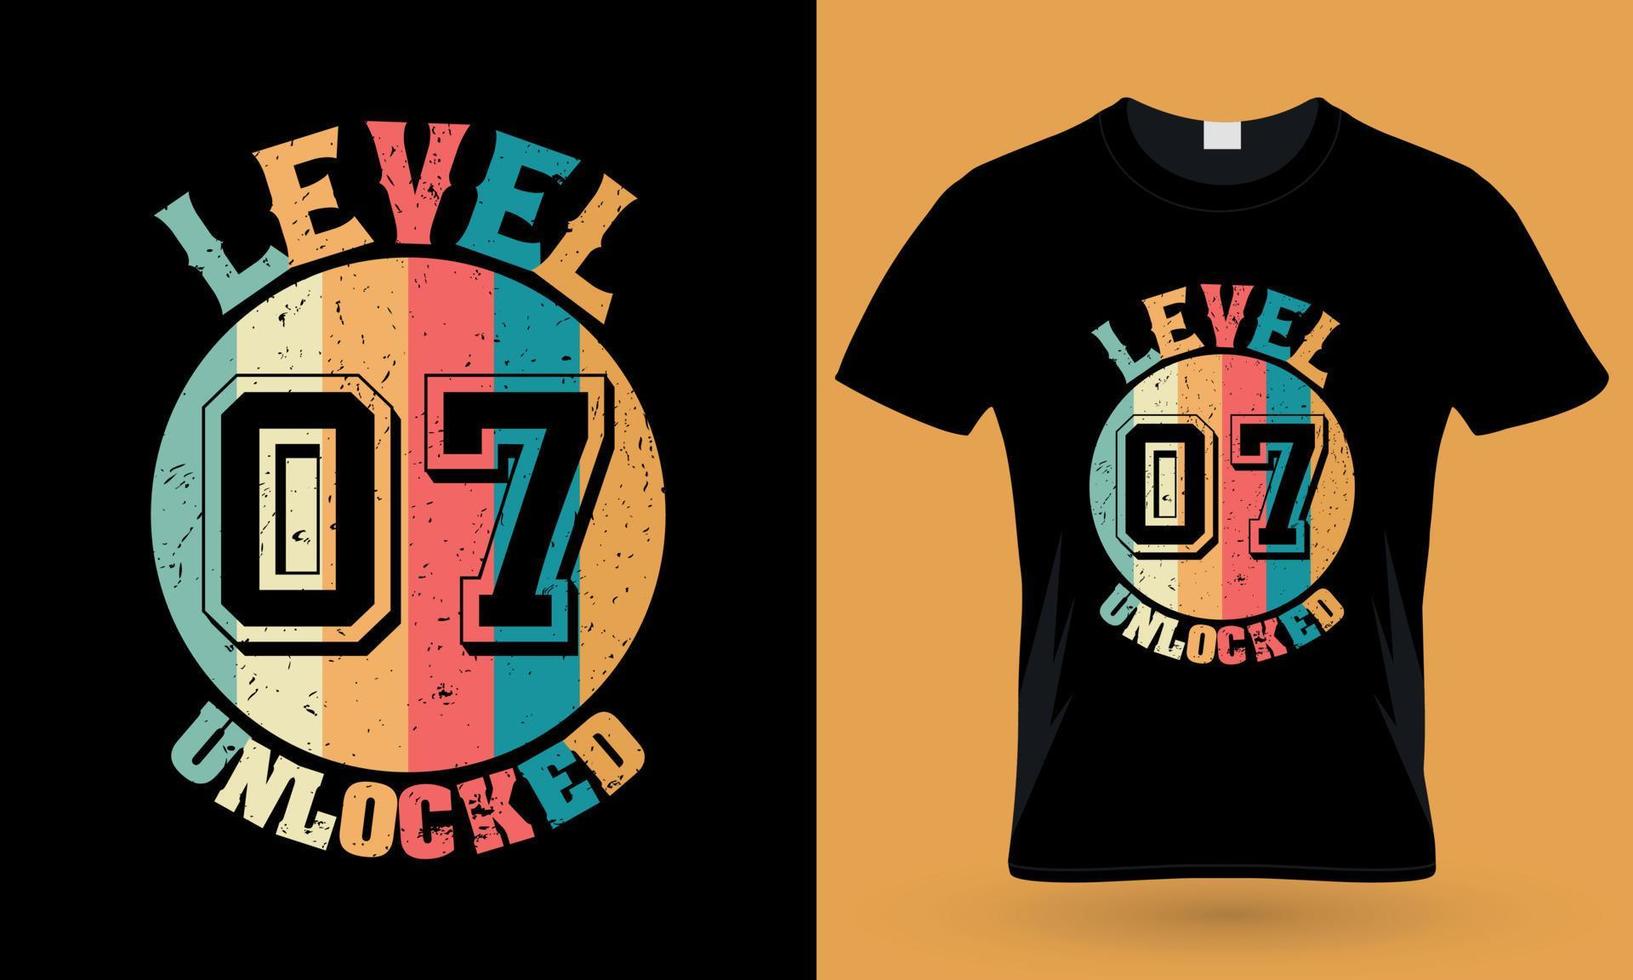 Level 07 unlocked. gaming typography t-shirt design vector